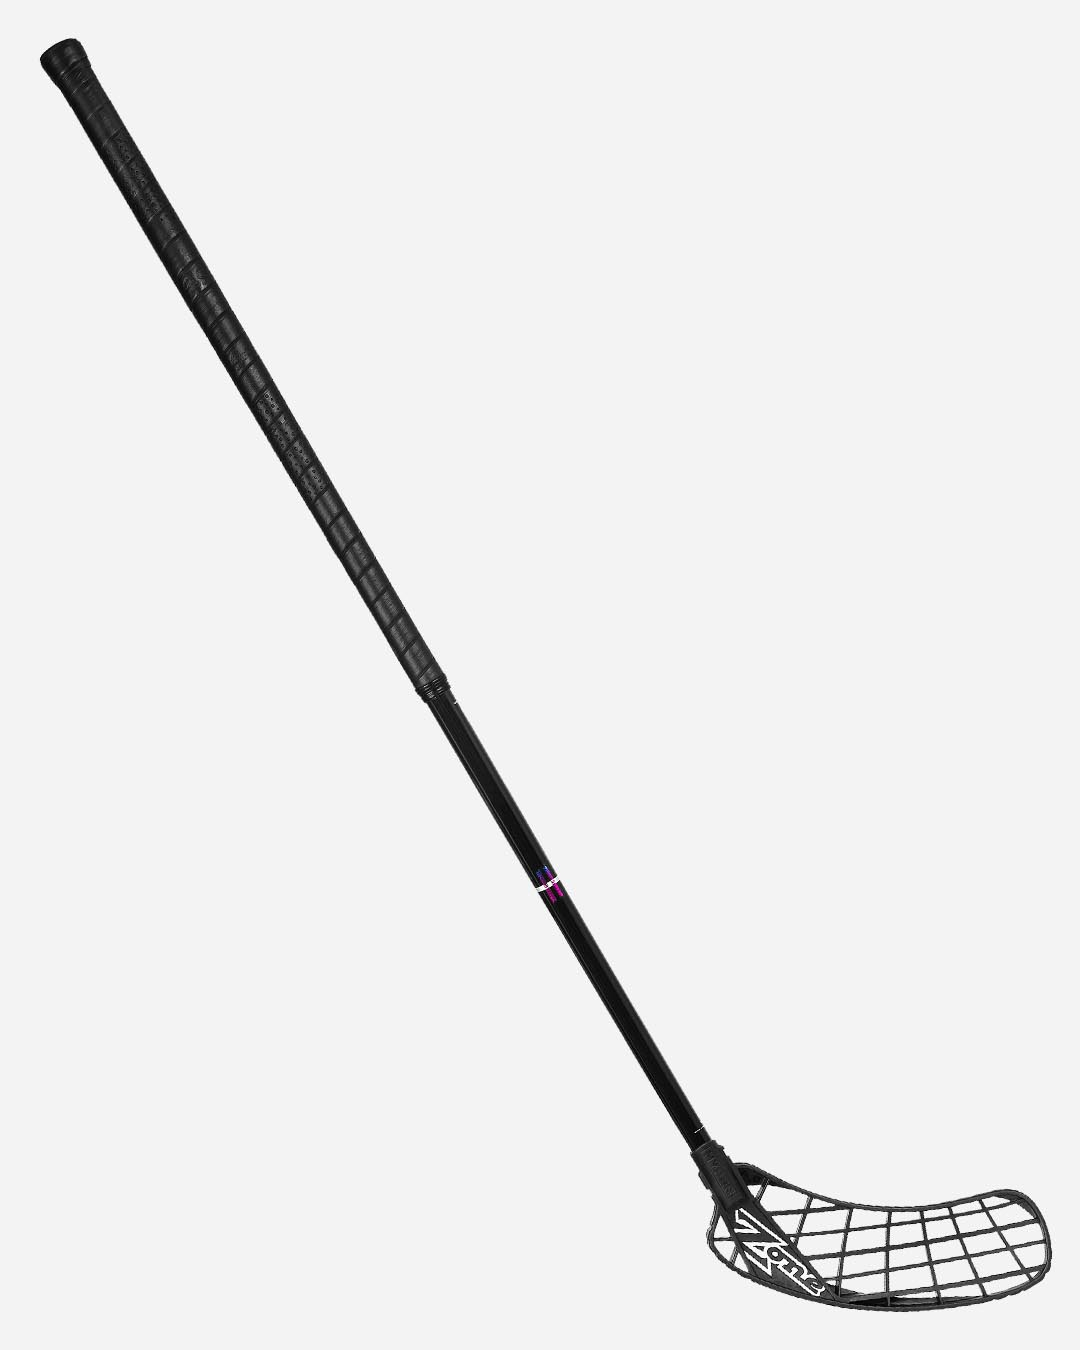 Junior Heat Outdoor Field Hockey Stick, Multi-Curve